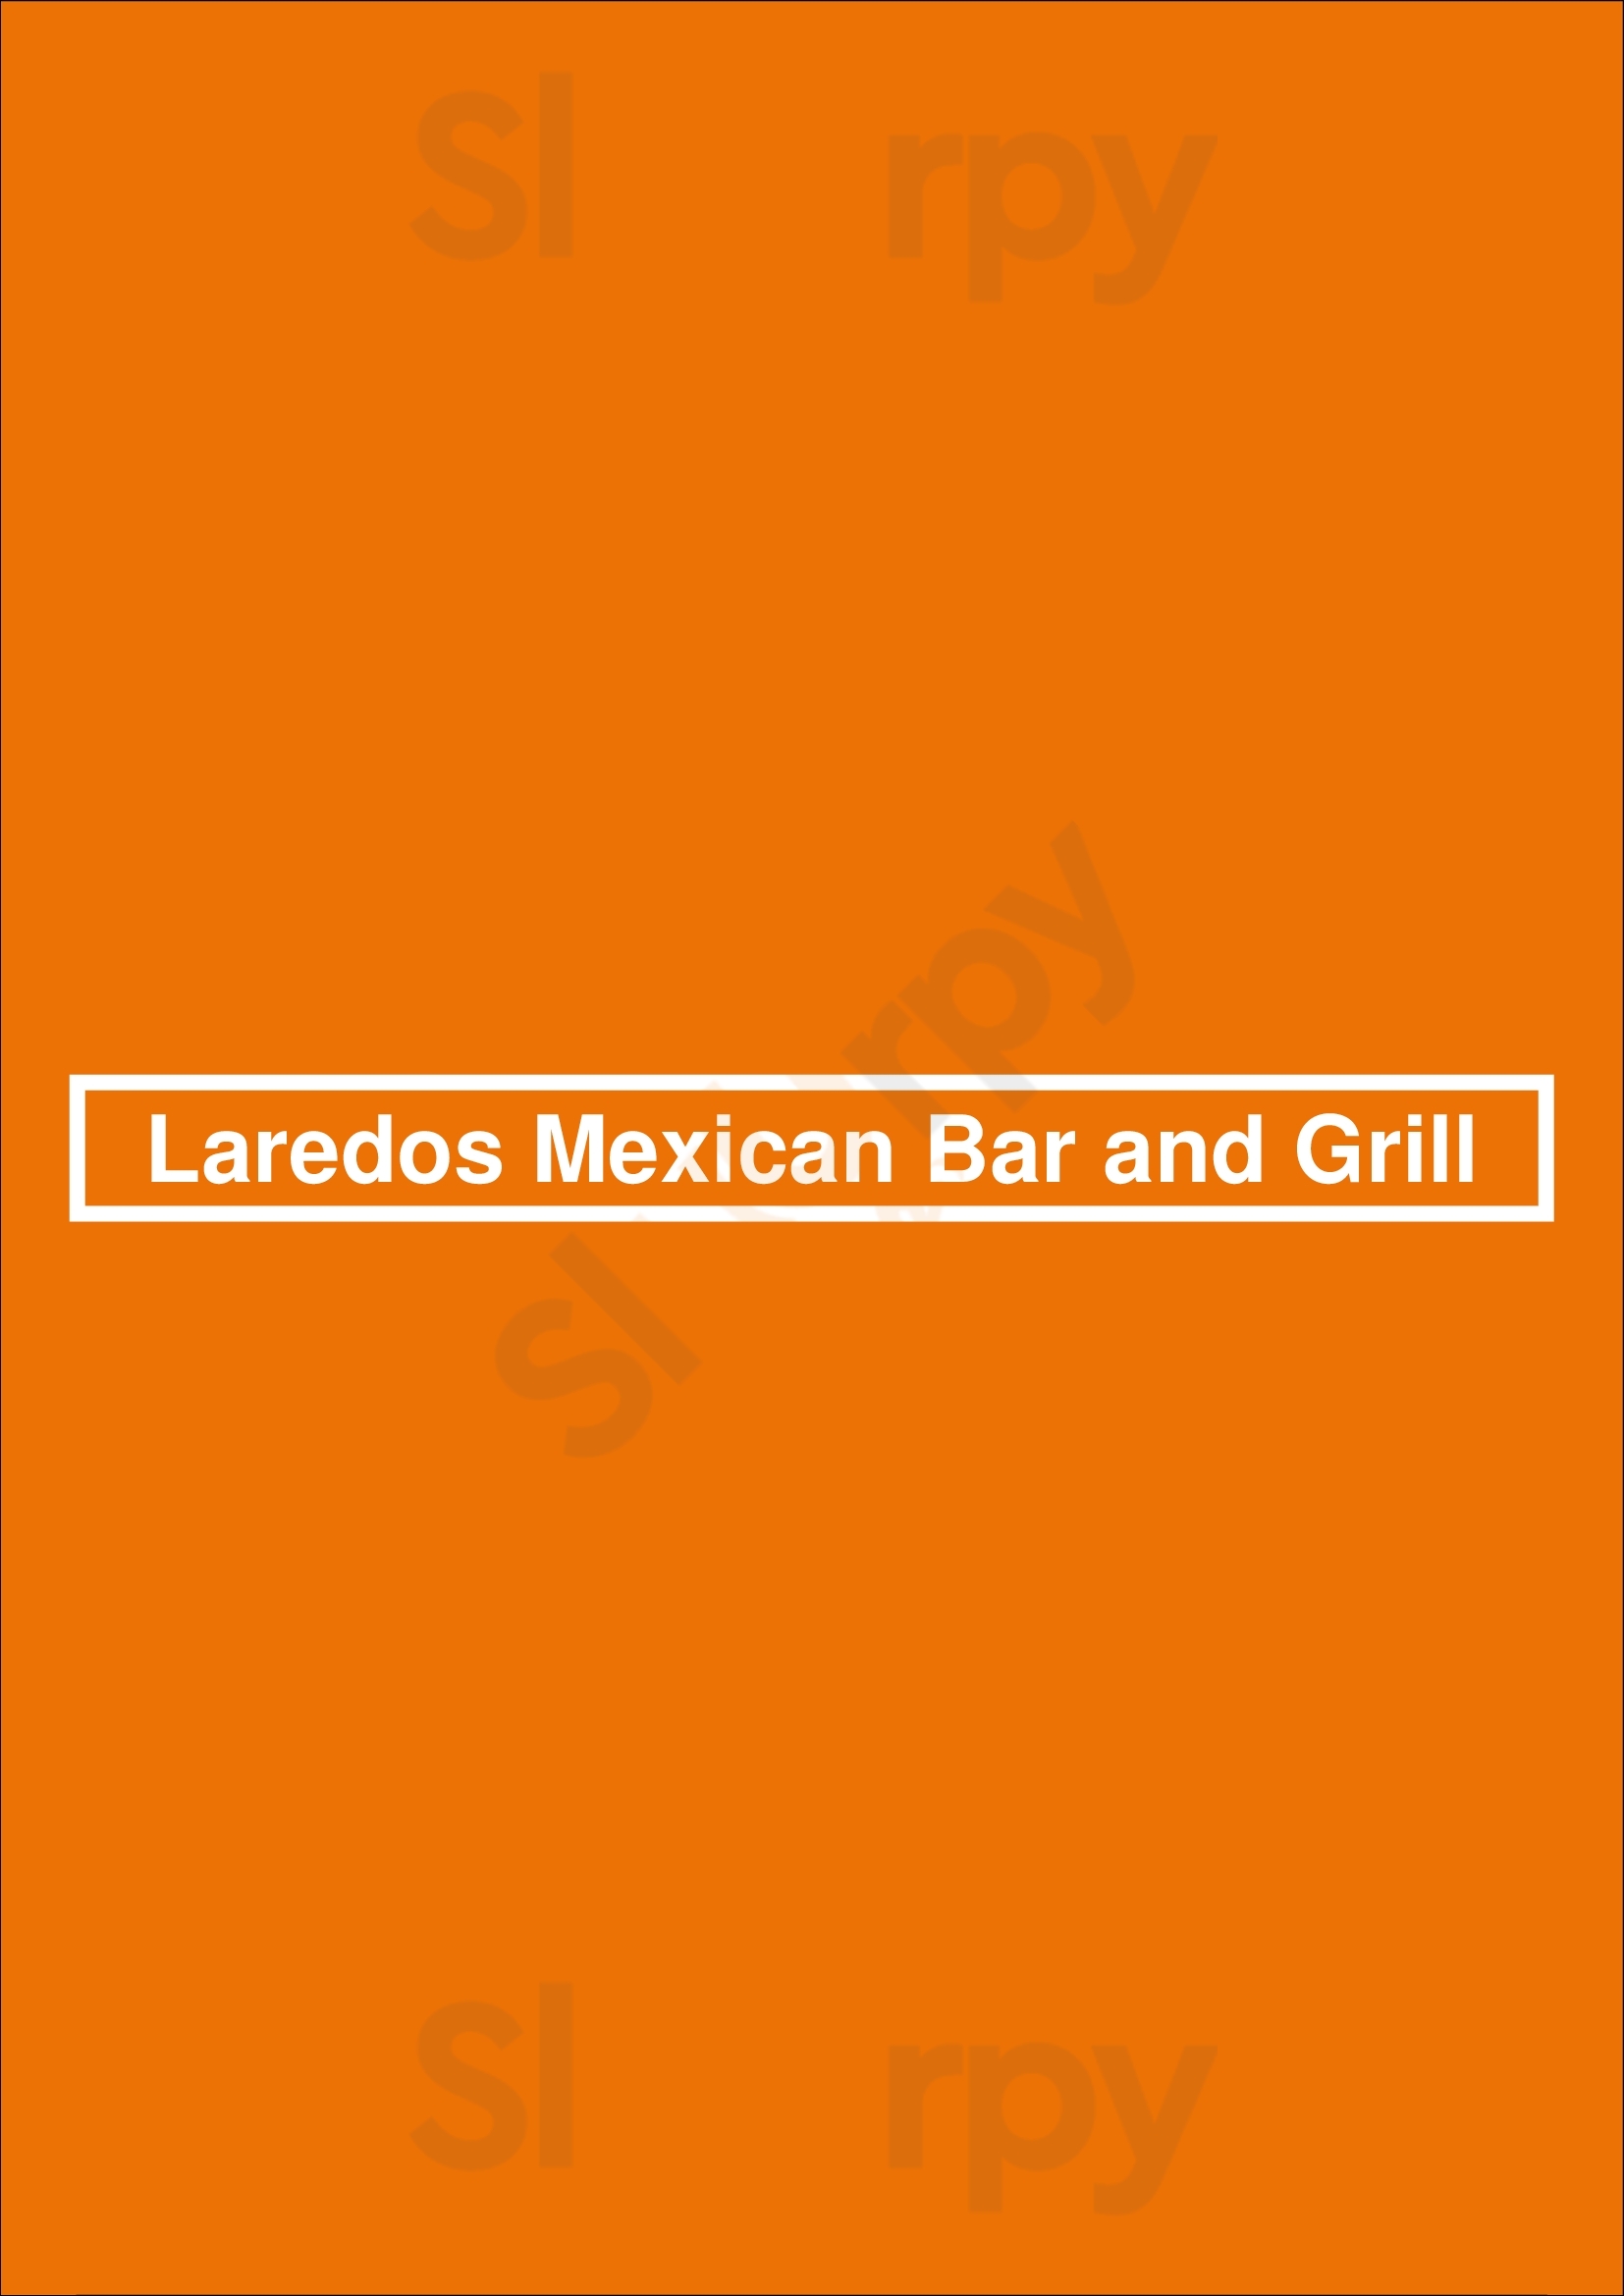 Laredos Mexican Bar And Grill Marietta Menu - 1